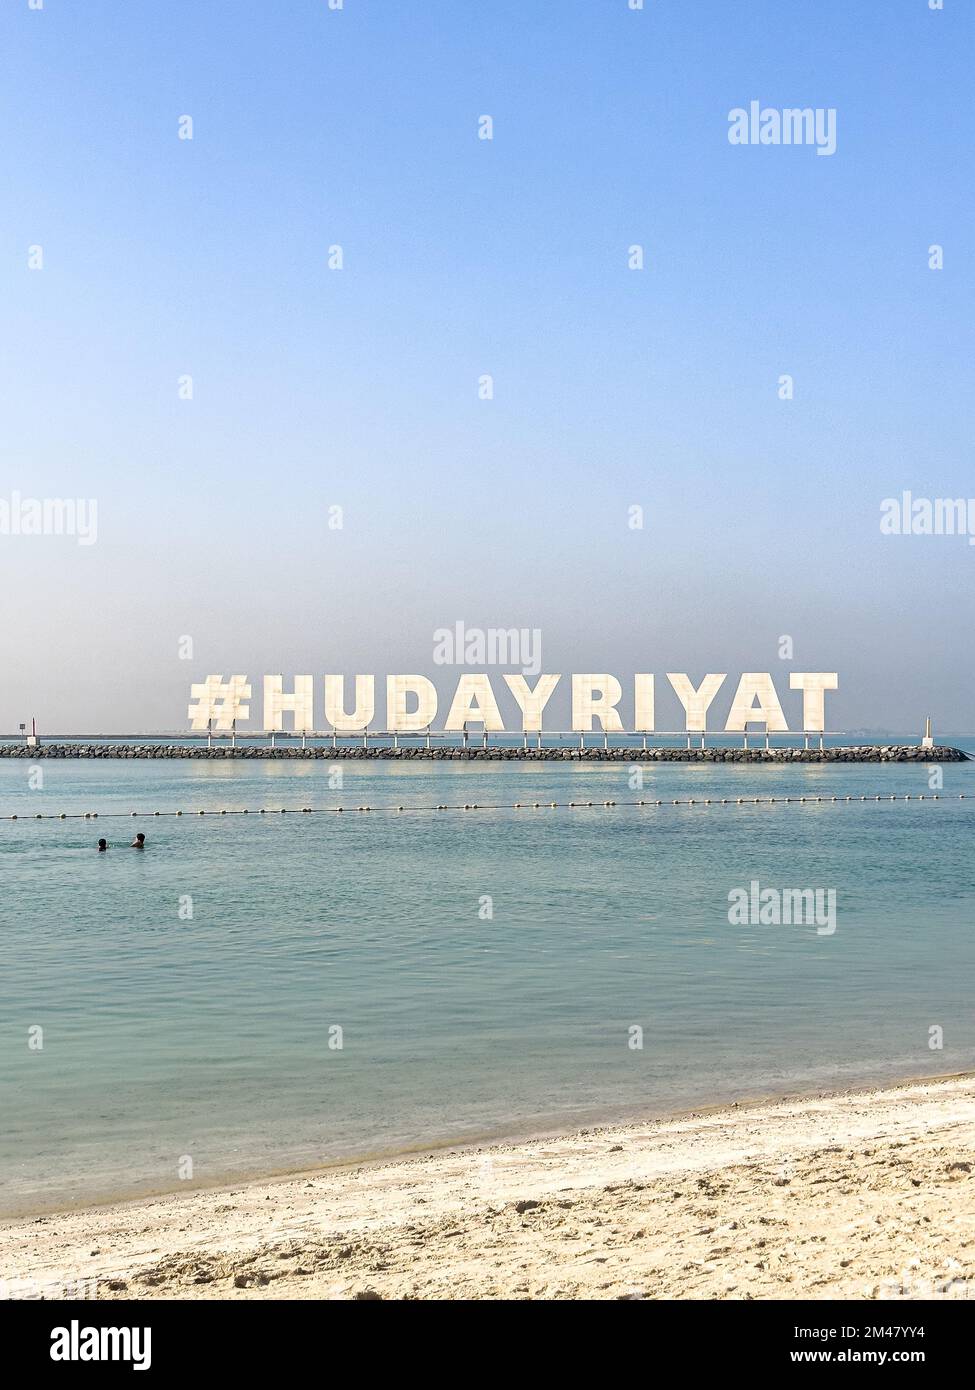 The Hudayriyat hashtag sign at the Hudayriyat Island Beach, Leisure  and Sport precinct in Abu Dhabi Stock Photo